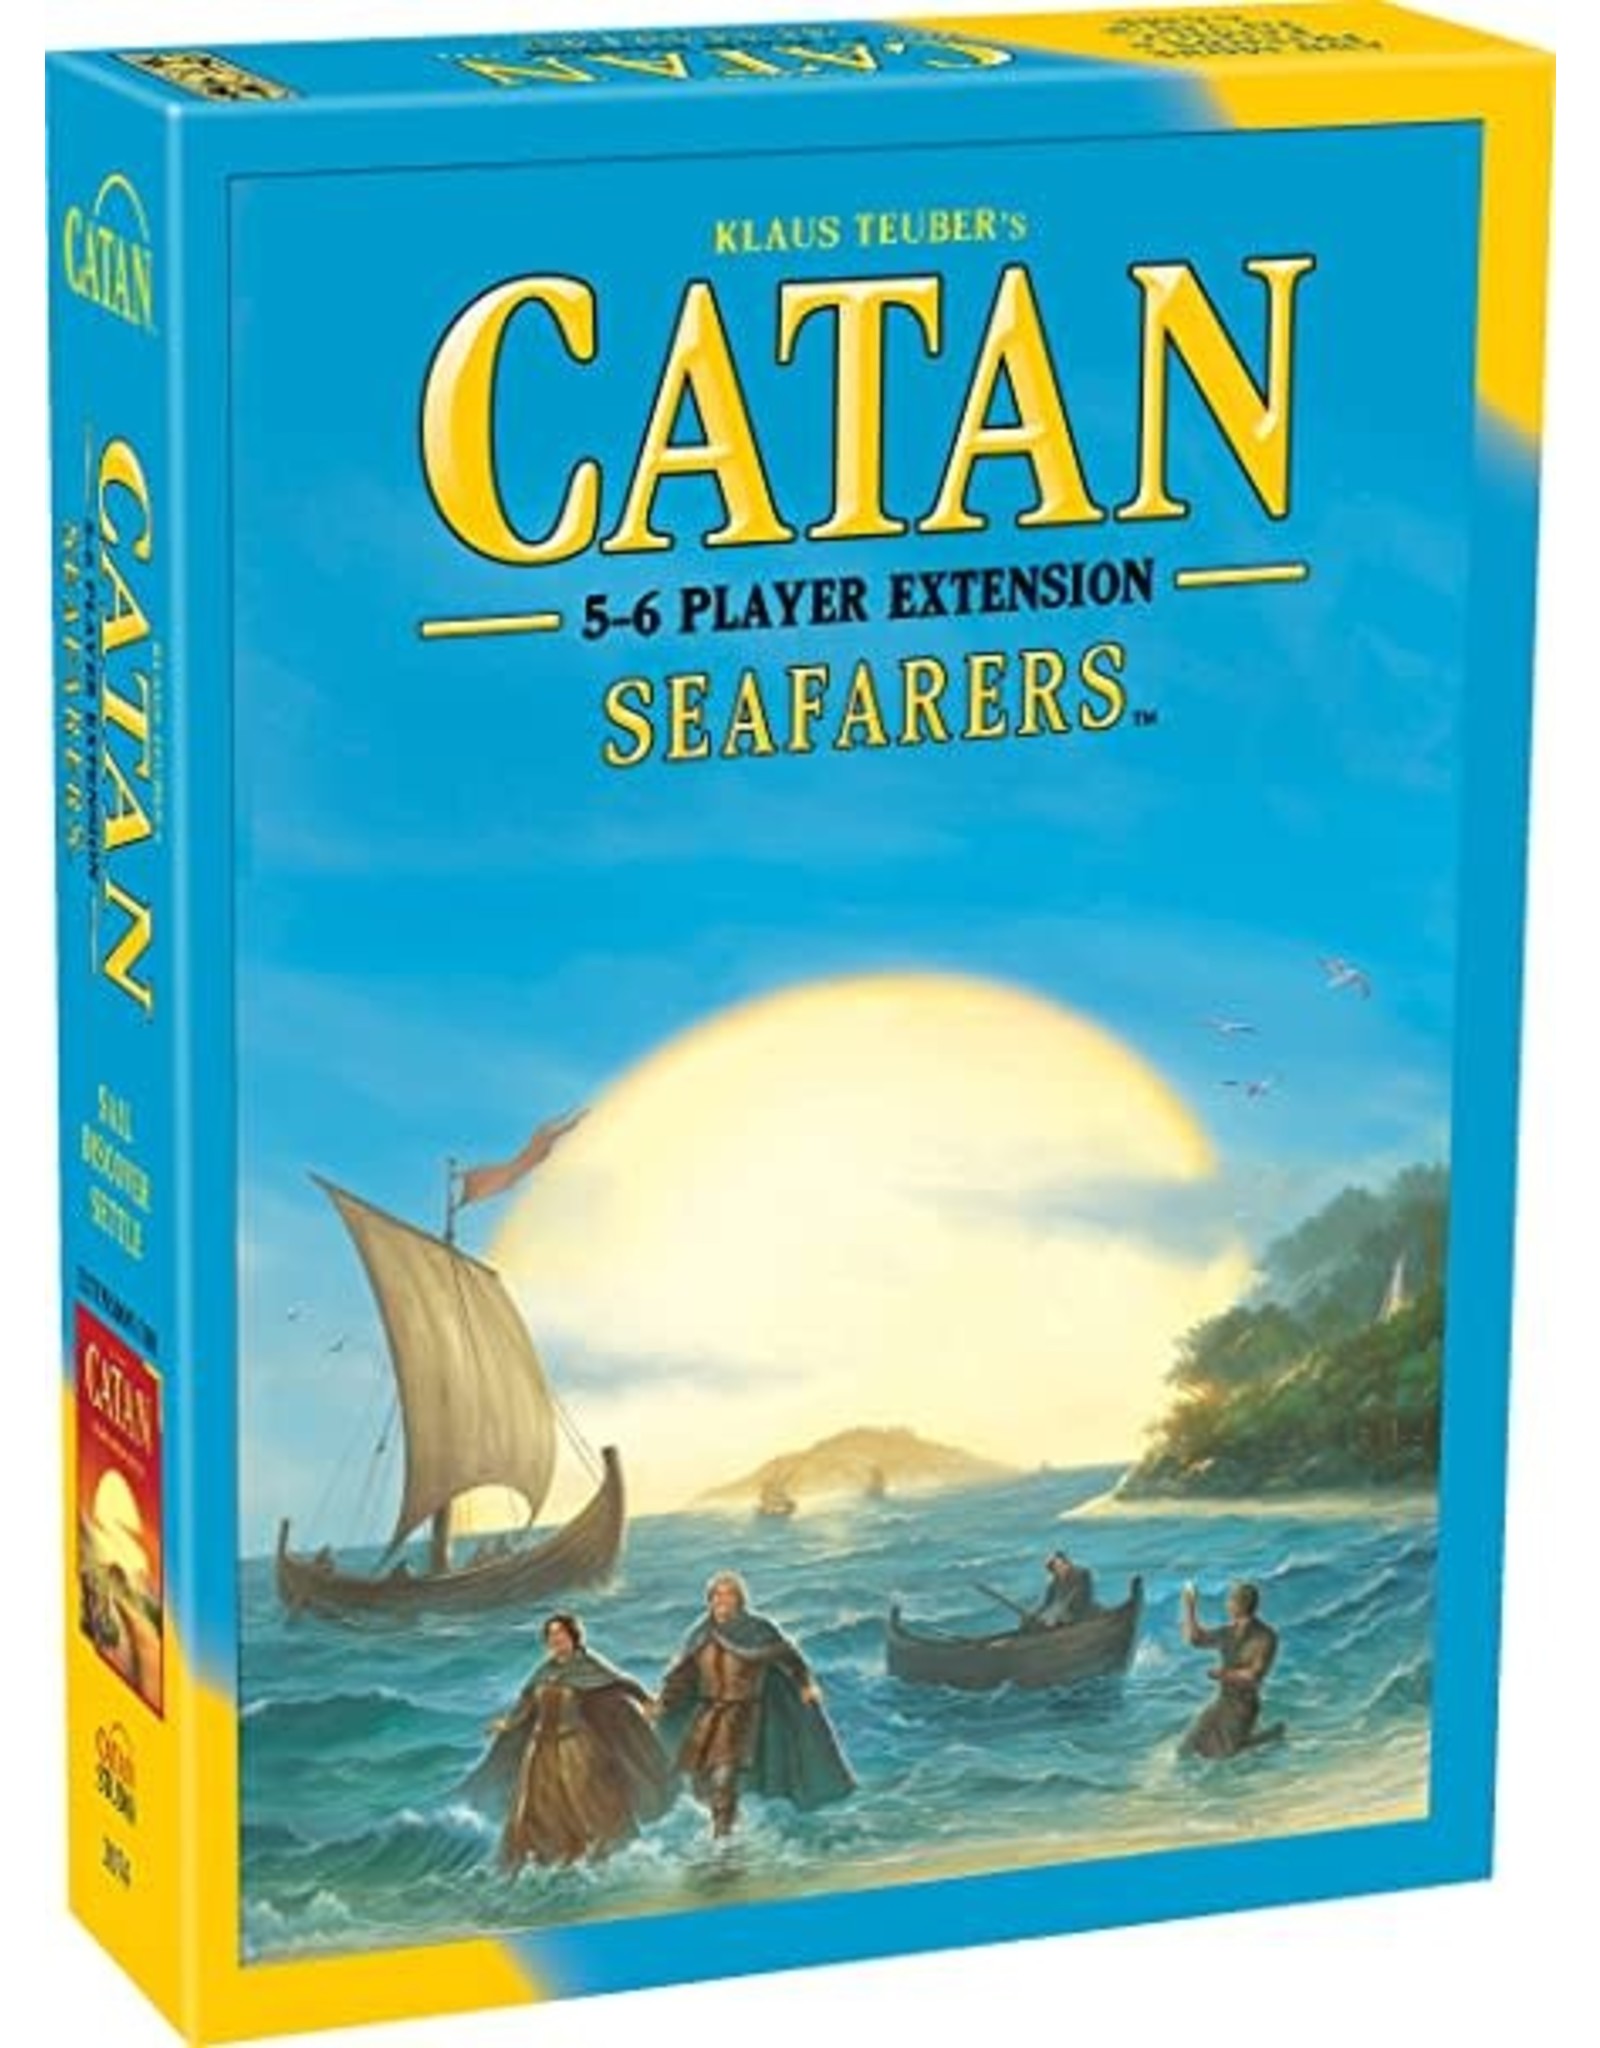 Catan Studio Catan Seafarers 5 to 6 Player Extension